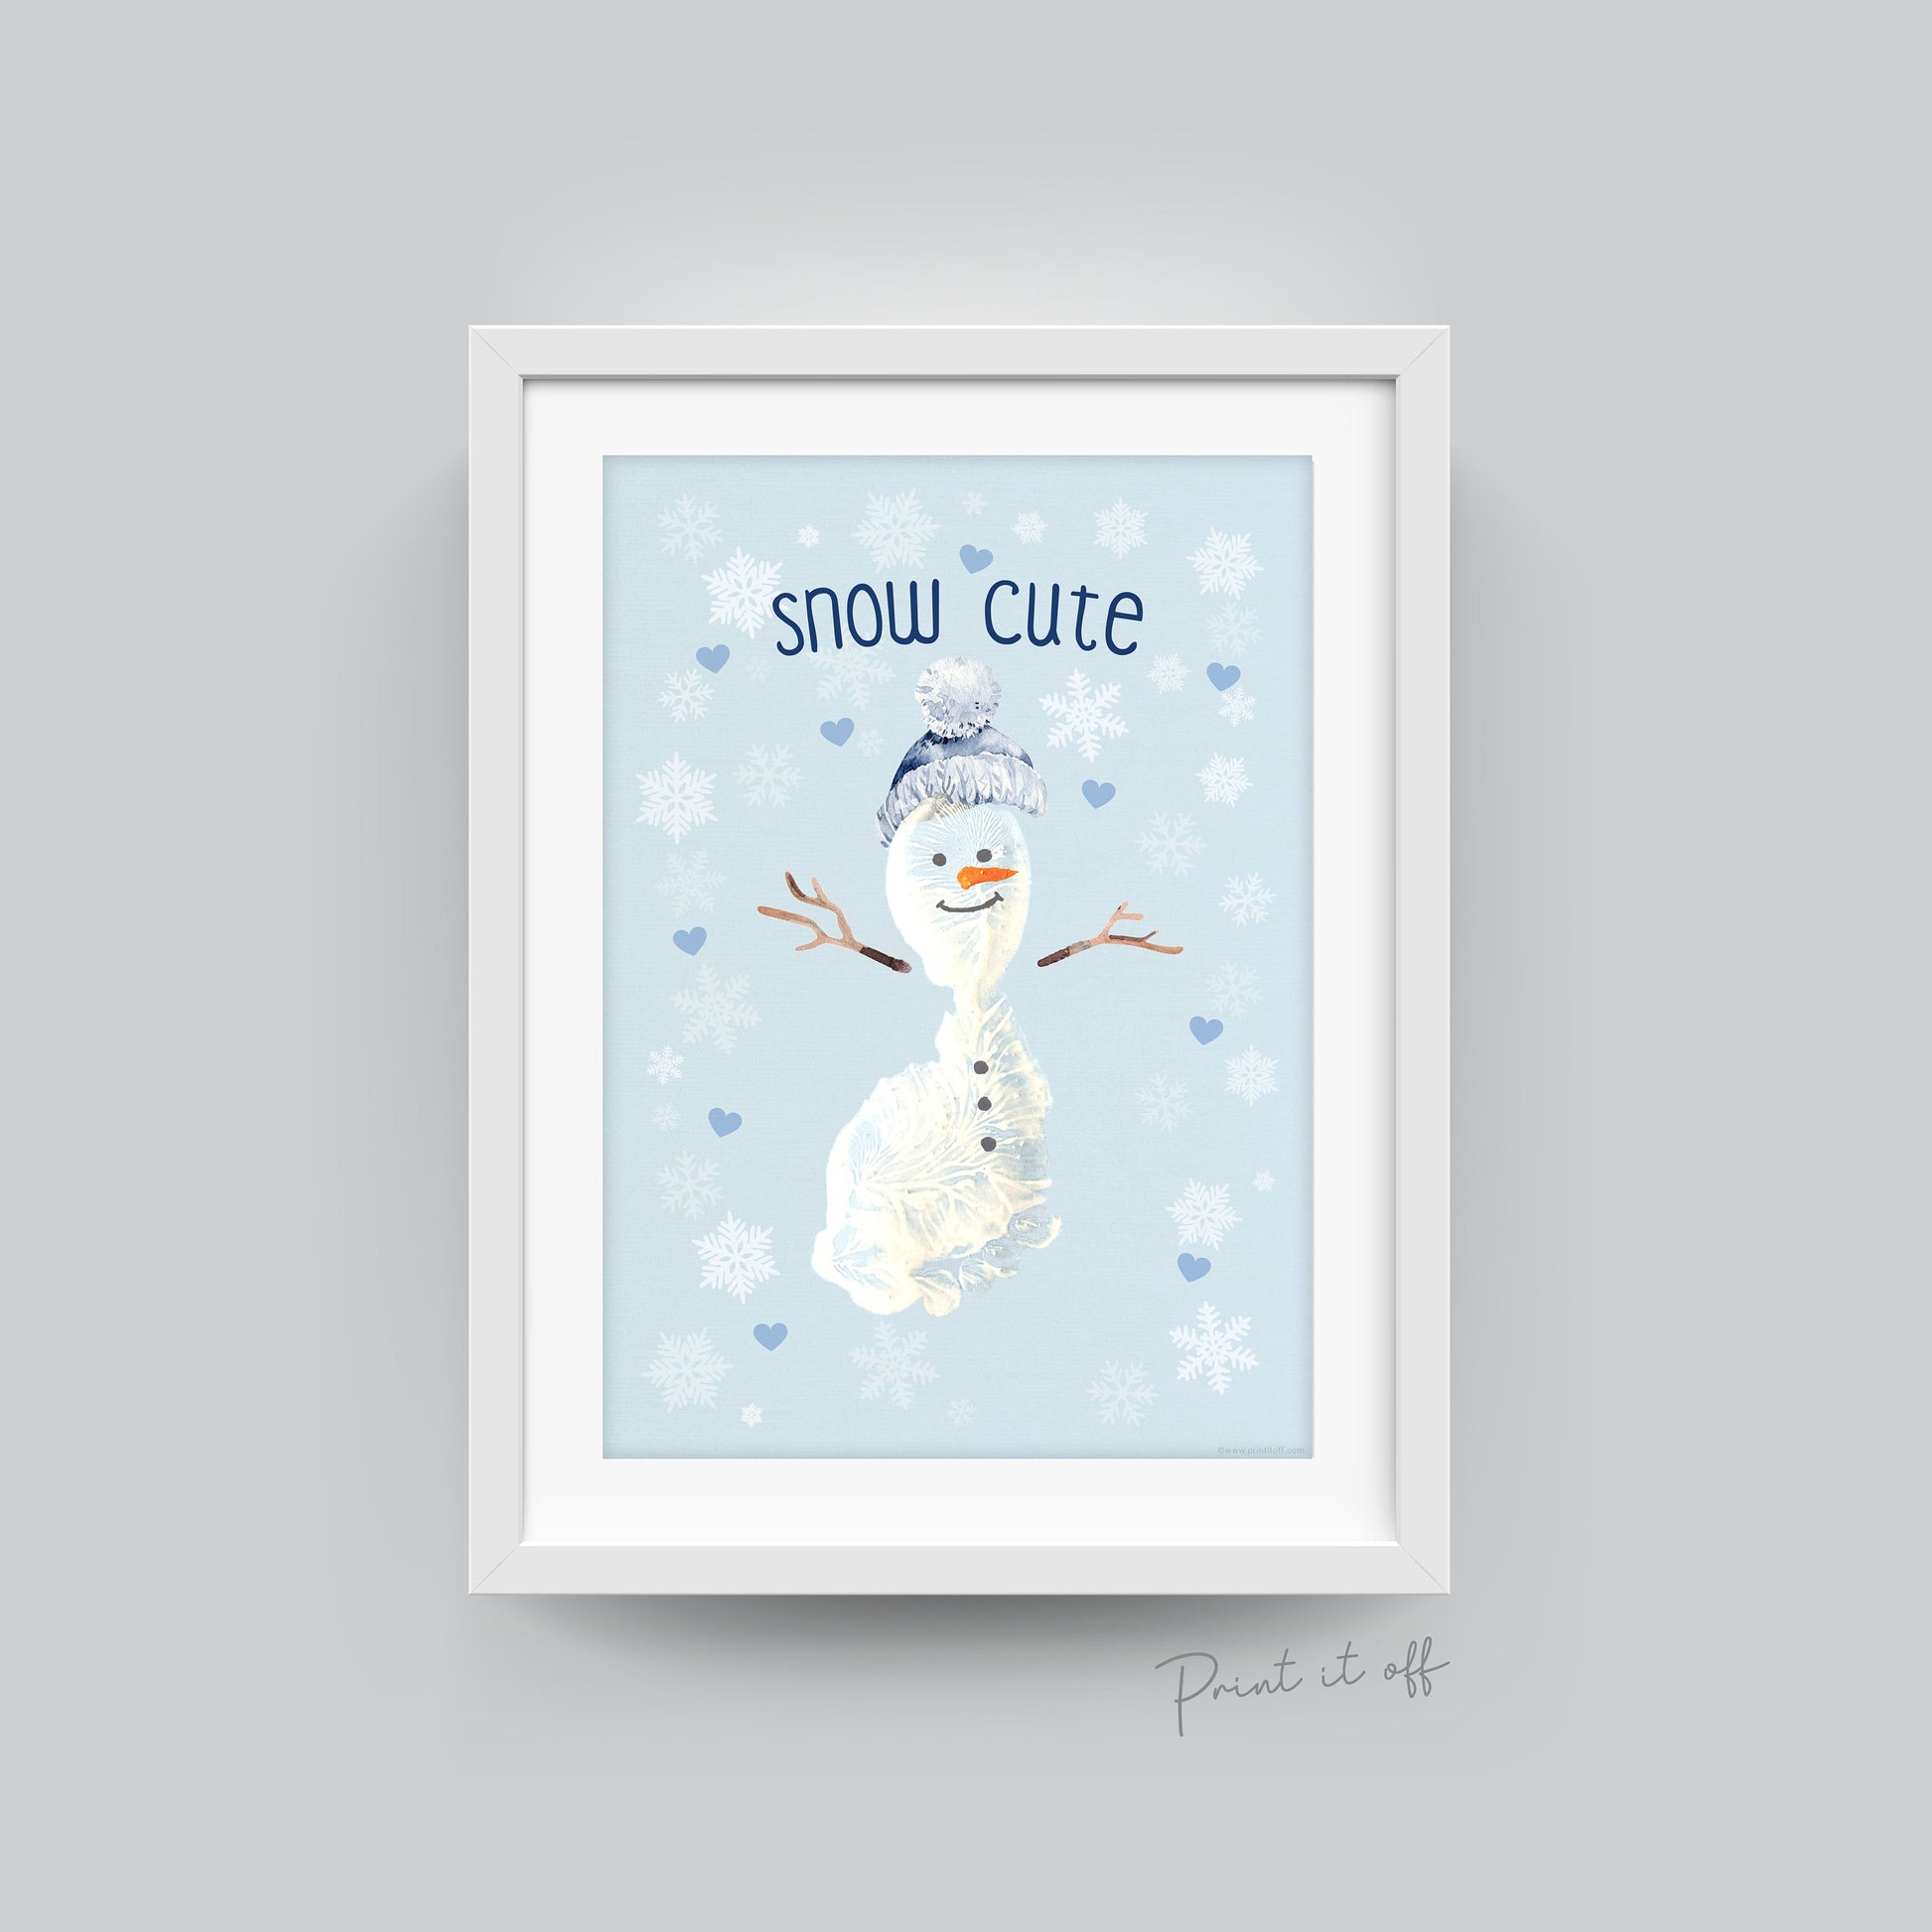 Snow Cute Snowman Footprint Foot Art Craft / First Christmas Xmas Baby Toddler Kids / DIY Card Gift Memory Keepsake / Print It Off 0661